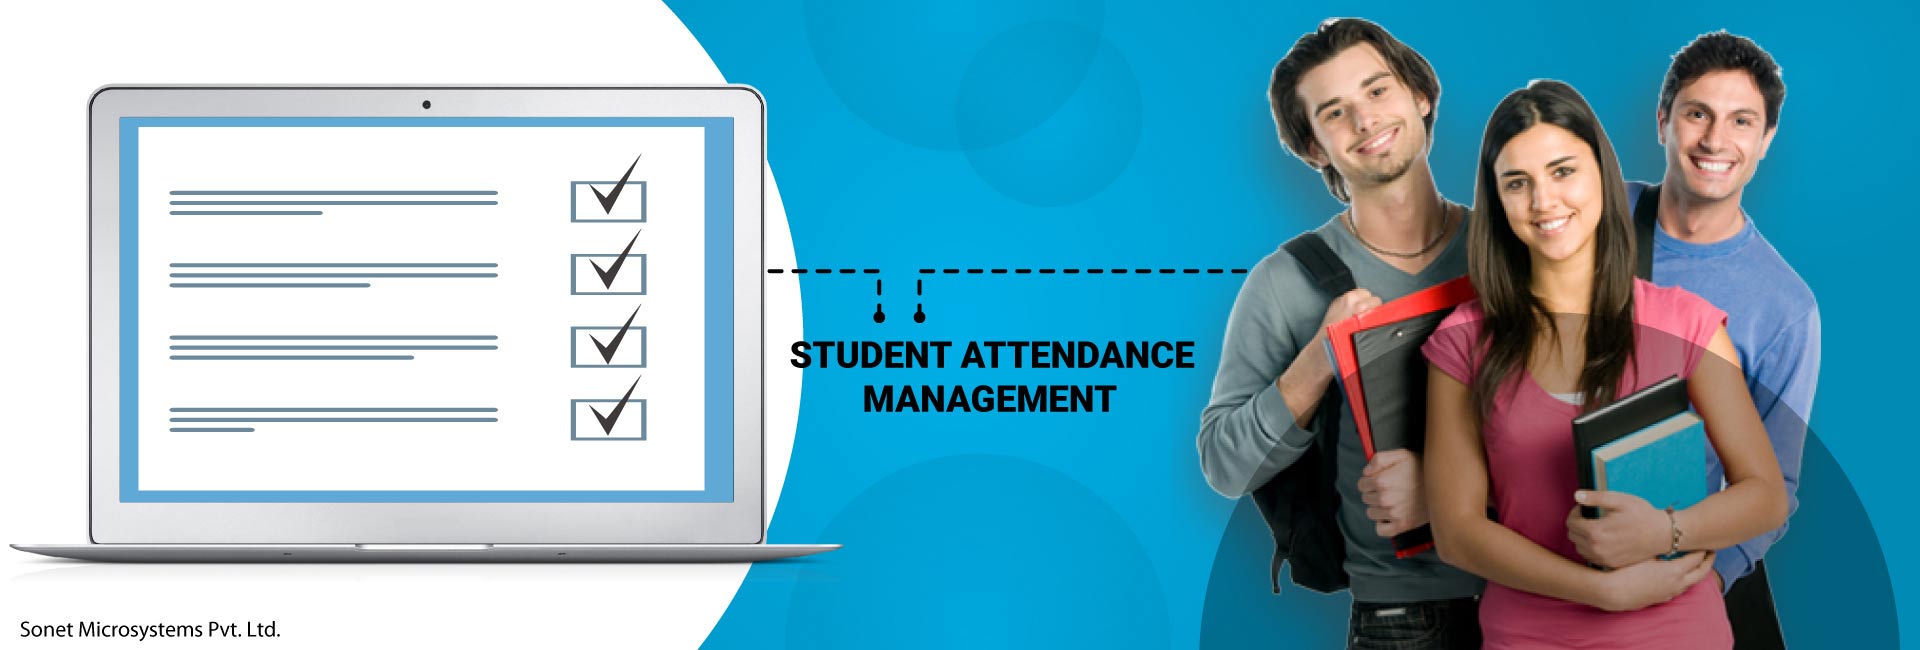 student attendance management, attendance management software